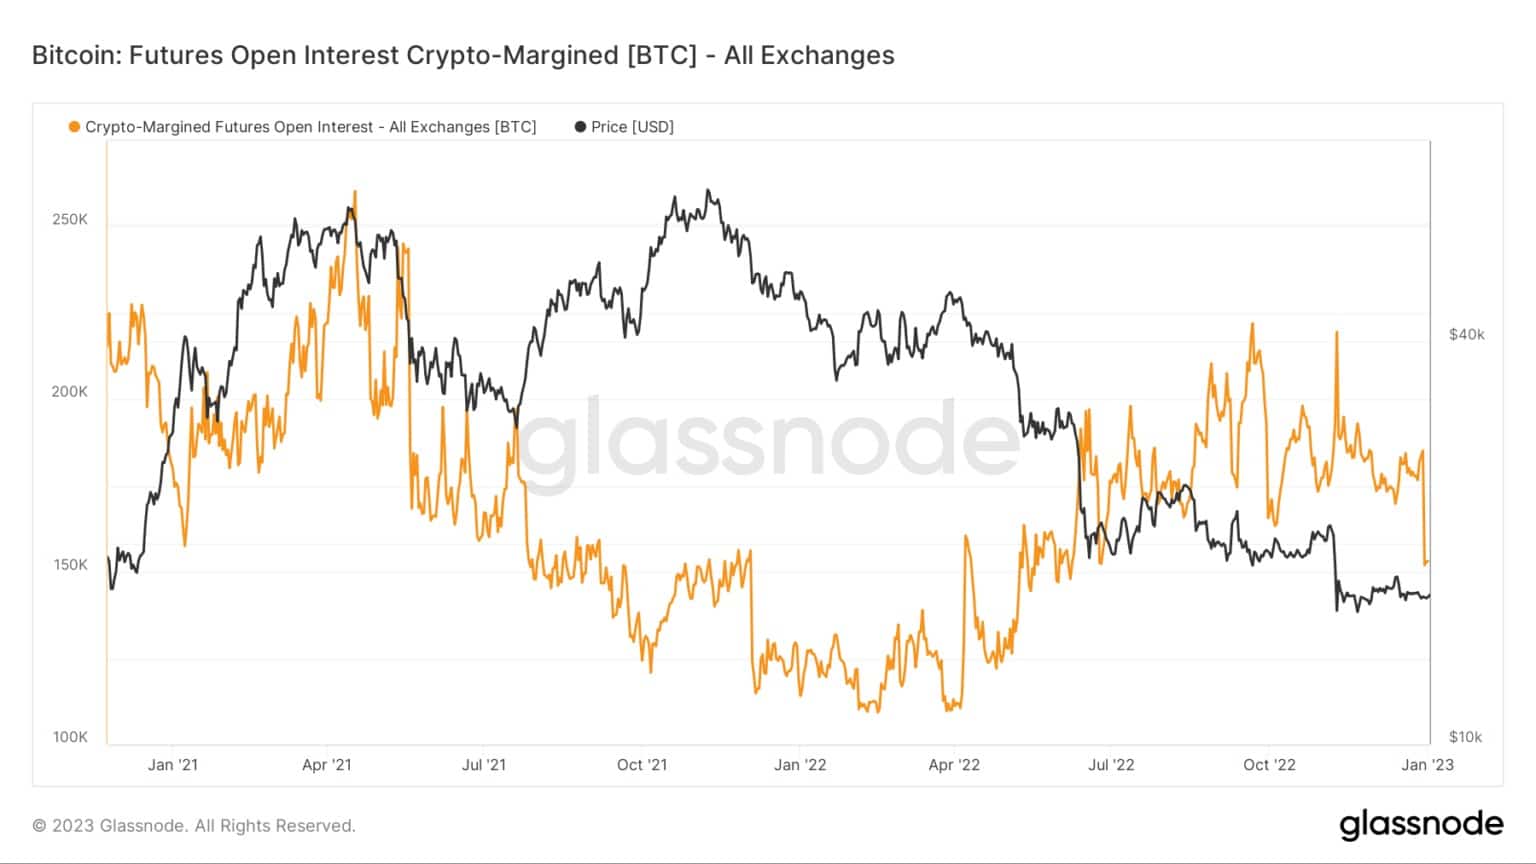 Bitcoin: Futures Open Interest crypto-Margined [BTC] - Source: Glassnode.com